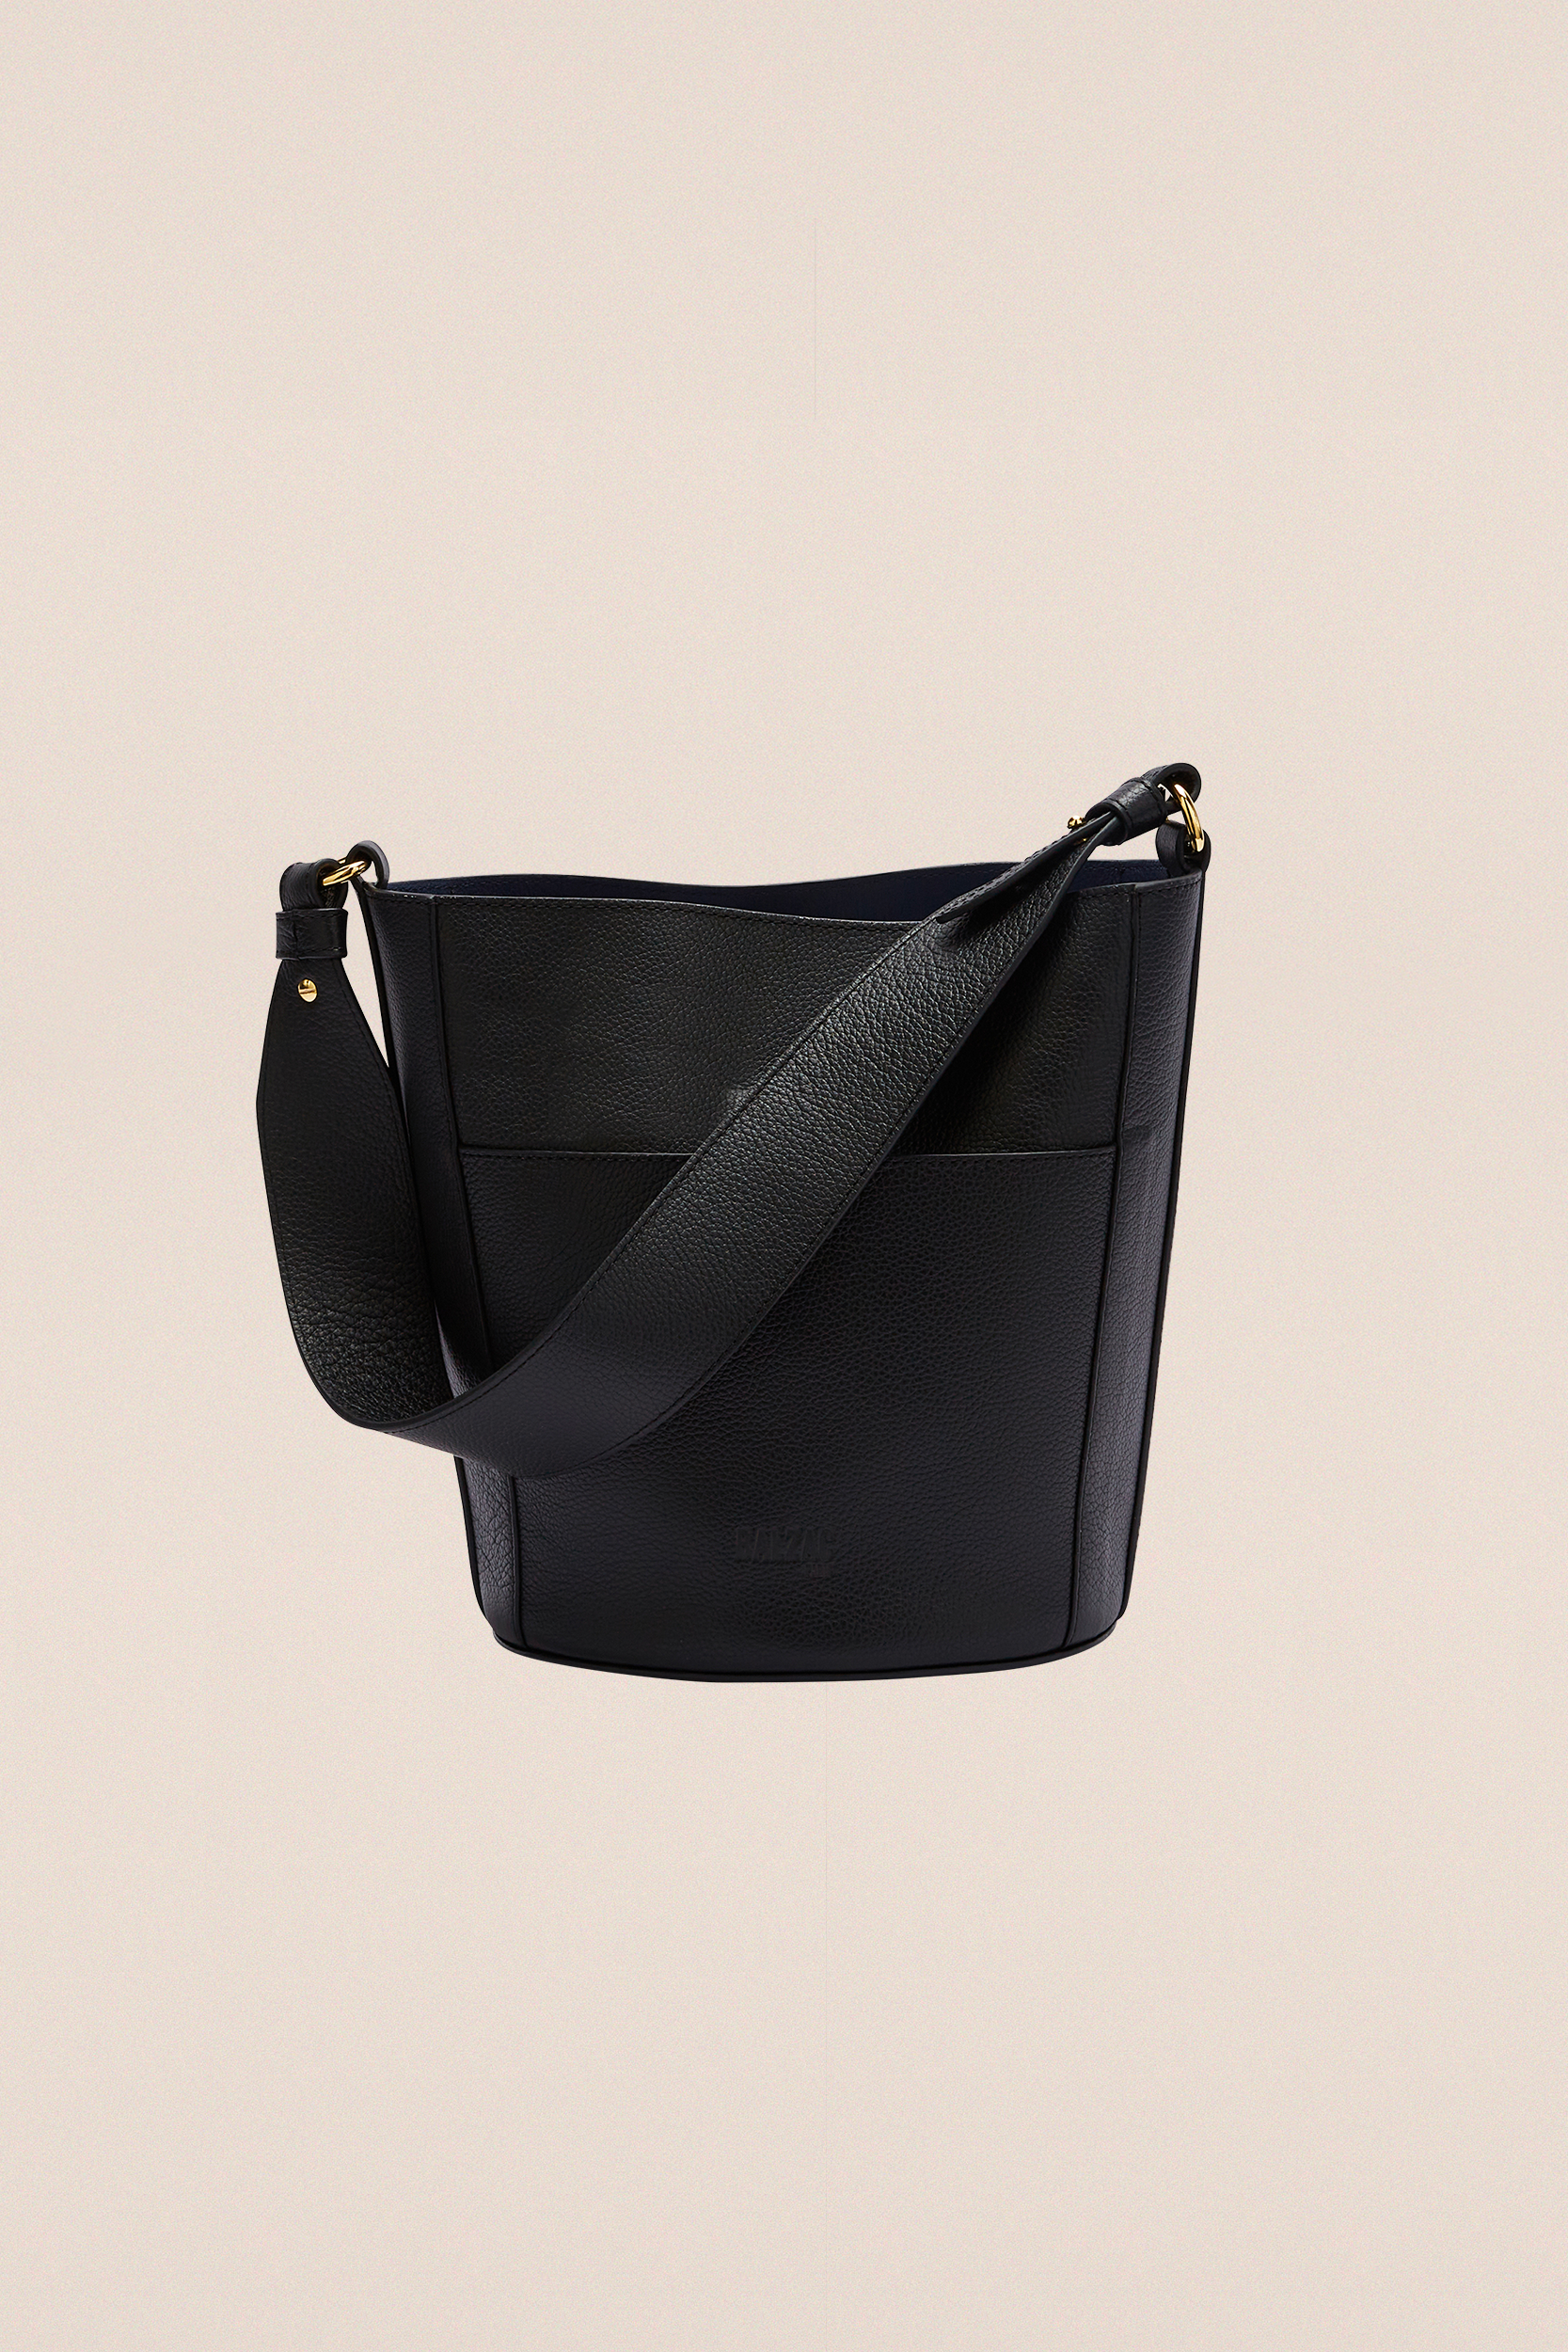 Black grained Sofia bag with navy interior